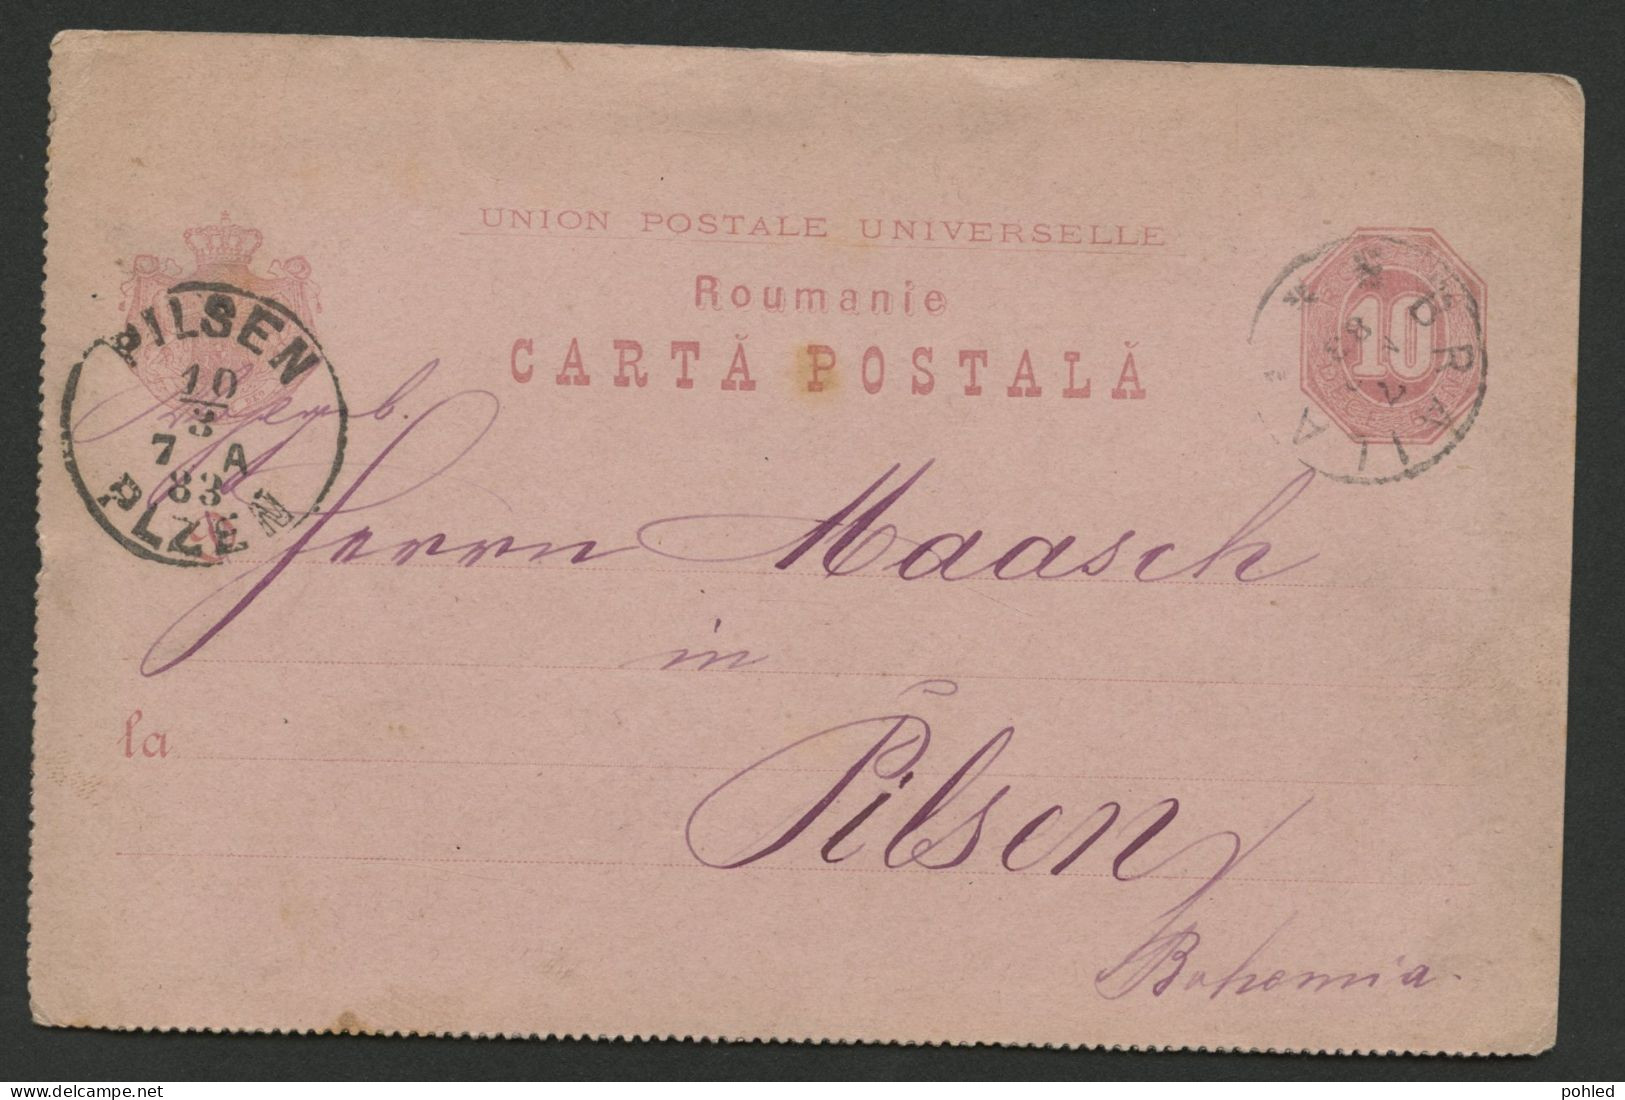 01303*RUMÄNIEN*ROMANIA*CARTA POSTALA*POSTAL STATIONARY*BRAILA TO CZECHIA*1883 - Lettres & Documents